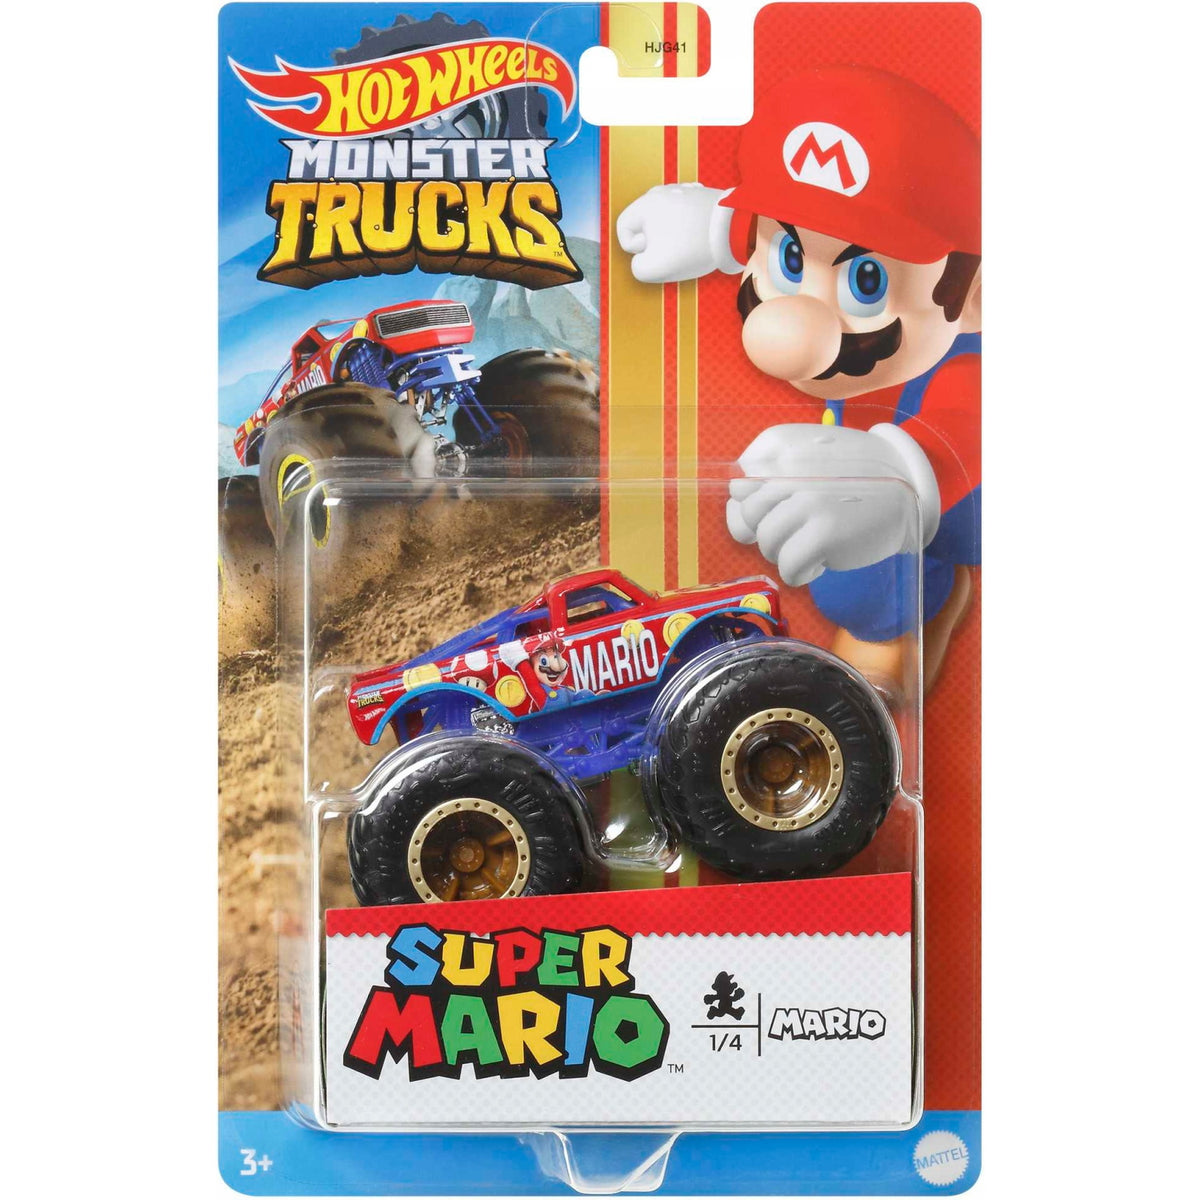 Hot Wheels Monster Trucks 1:64 Super Mario Themed Vehicle - Mario